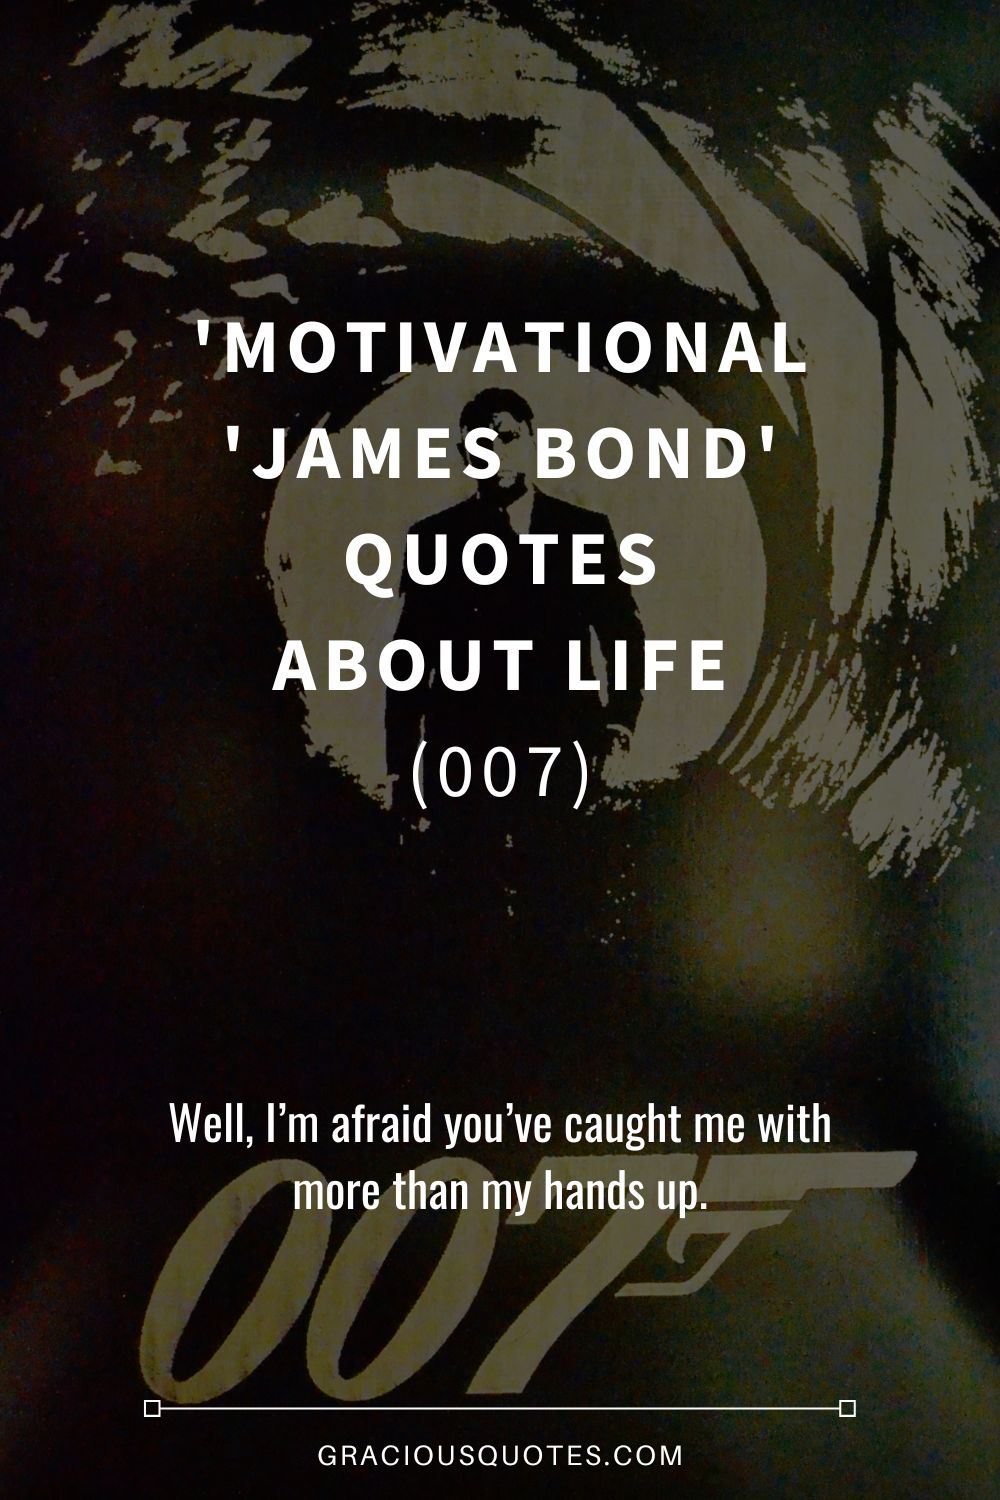 'Motivational 'James Bond' Quotes About Life (007) - Gracious Quotes